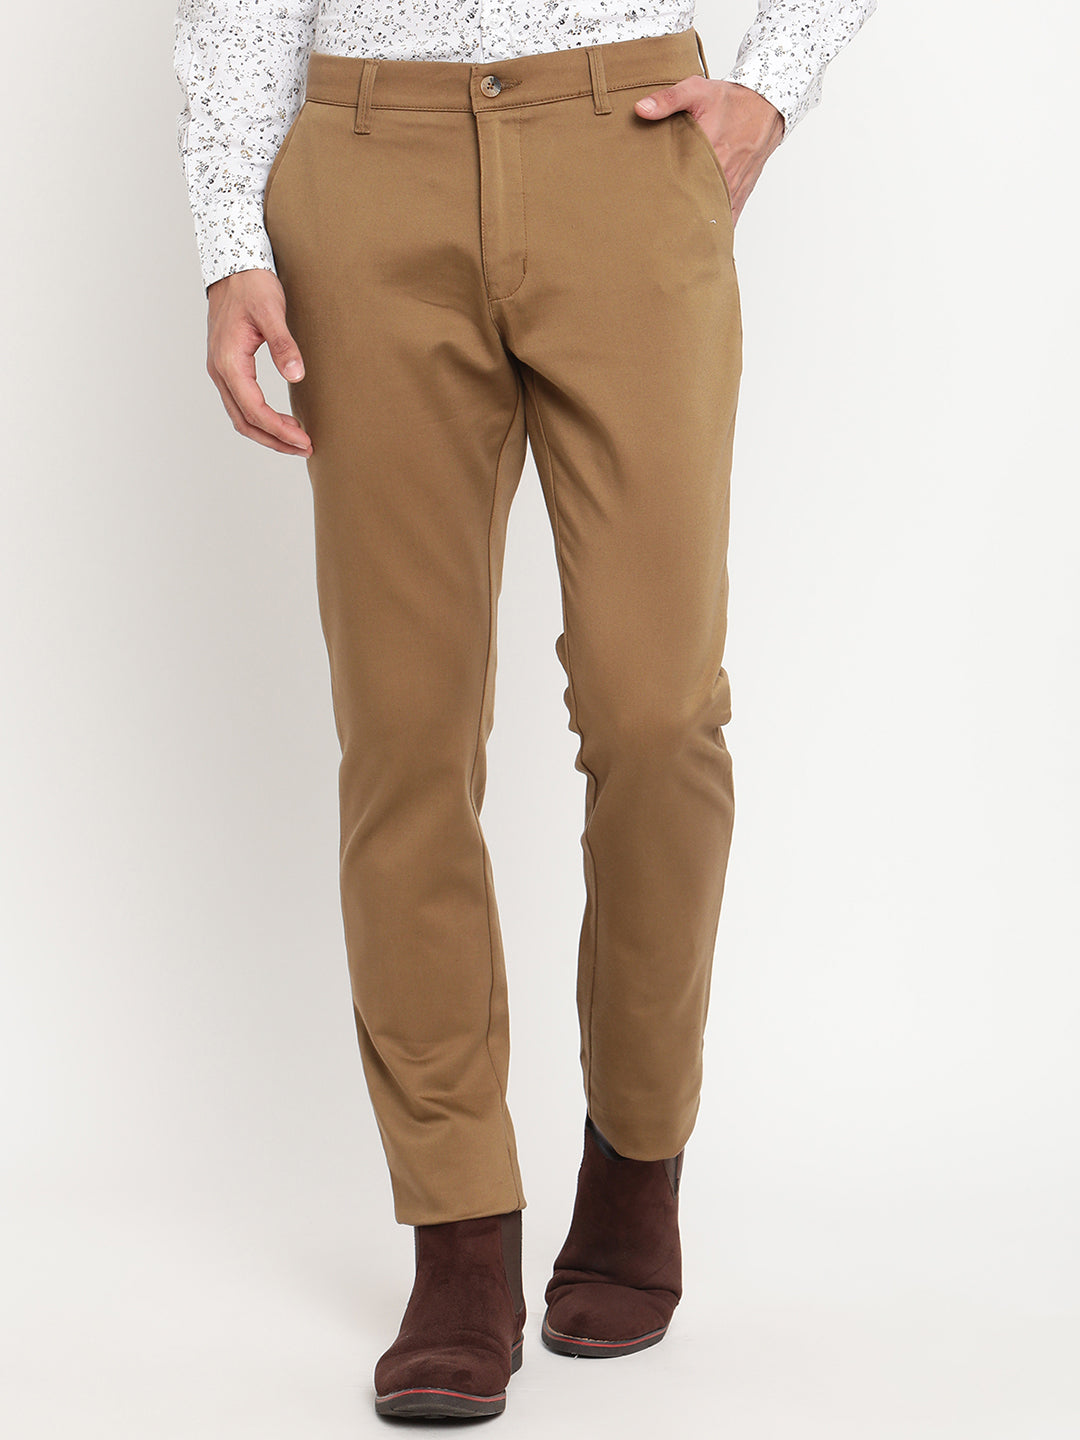 Regular Fit Corduroy Pants - Brown - Men | H&M US